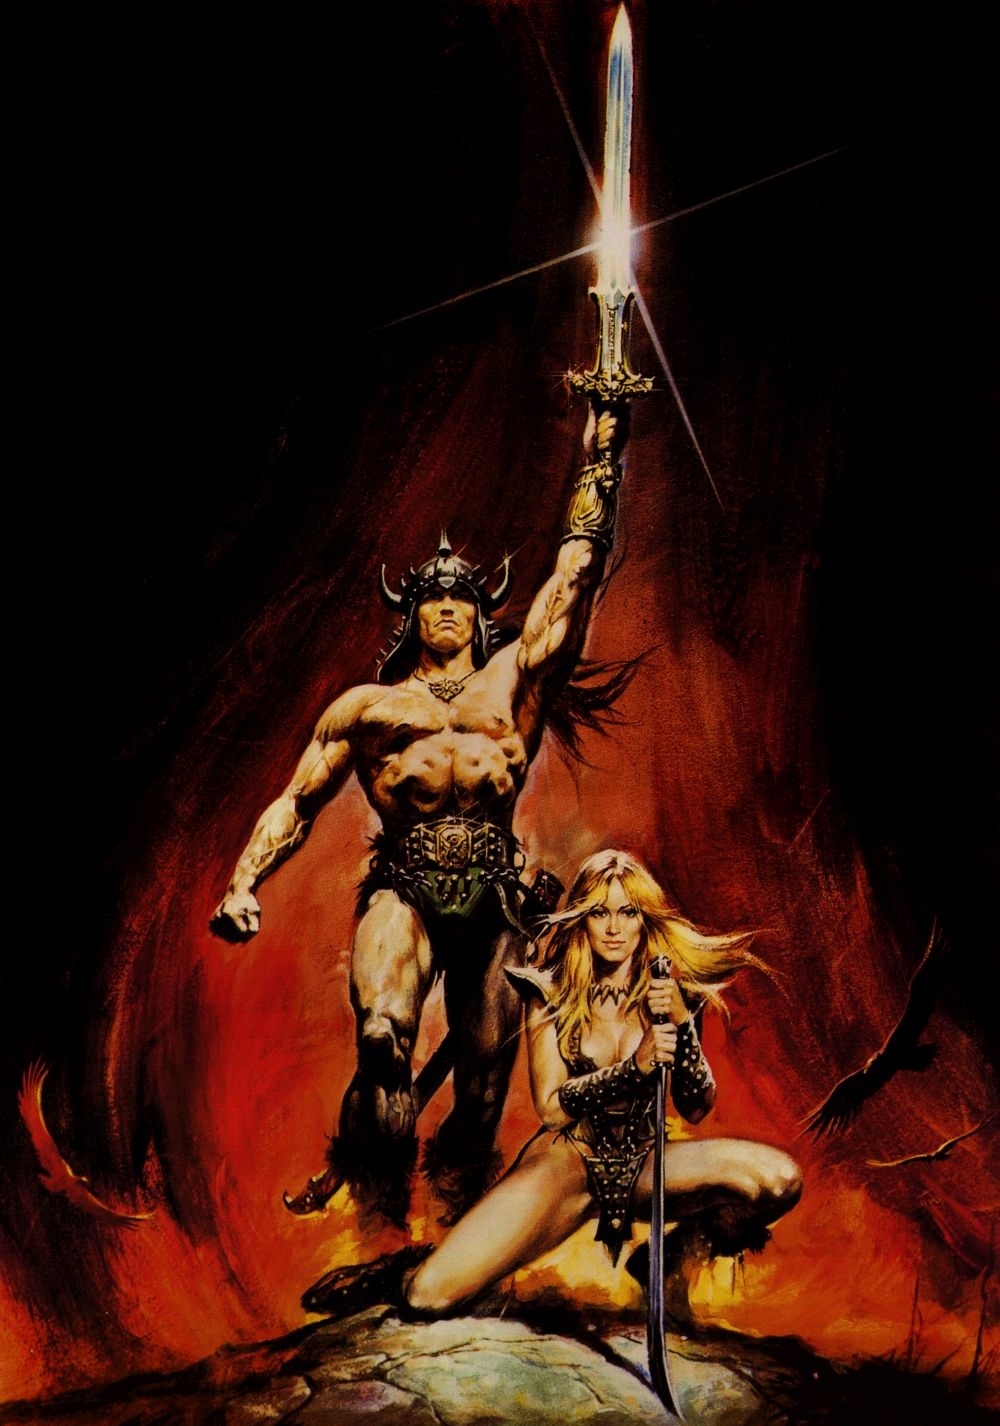 Anime Conan the Barbarian (1982) Art